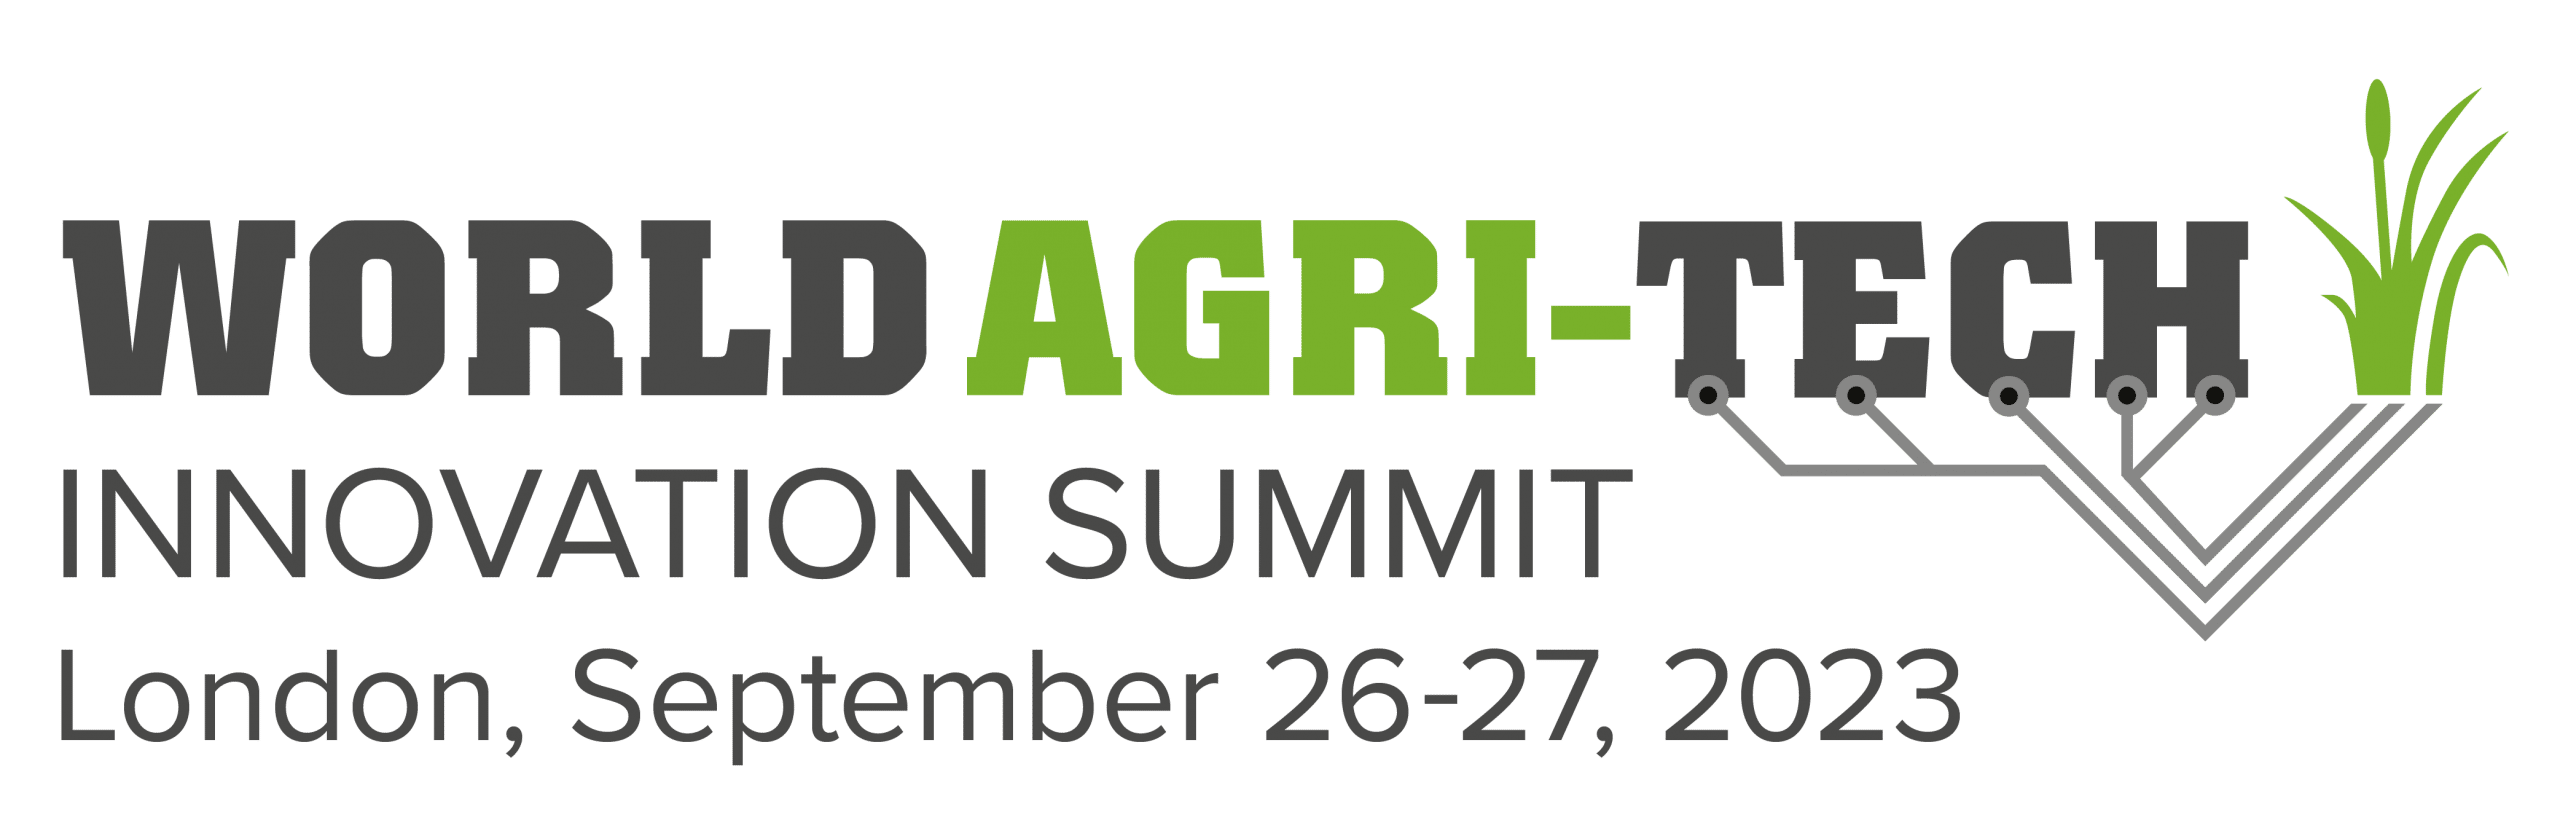 World Agri-Tech Innovation Summit London 2023